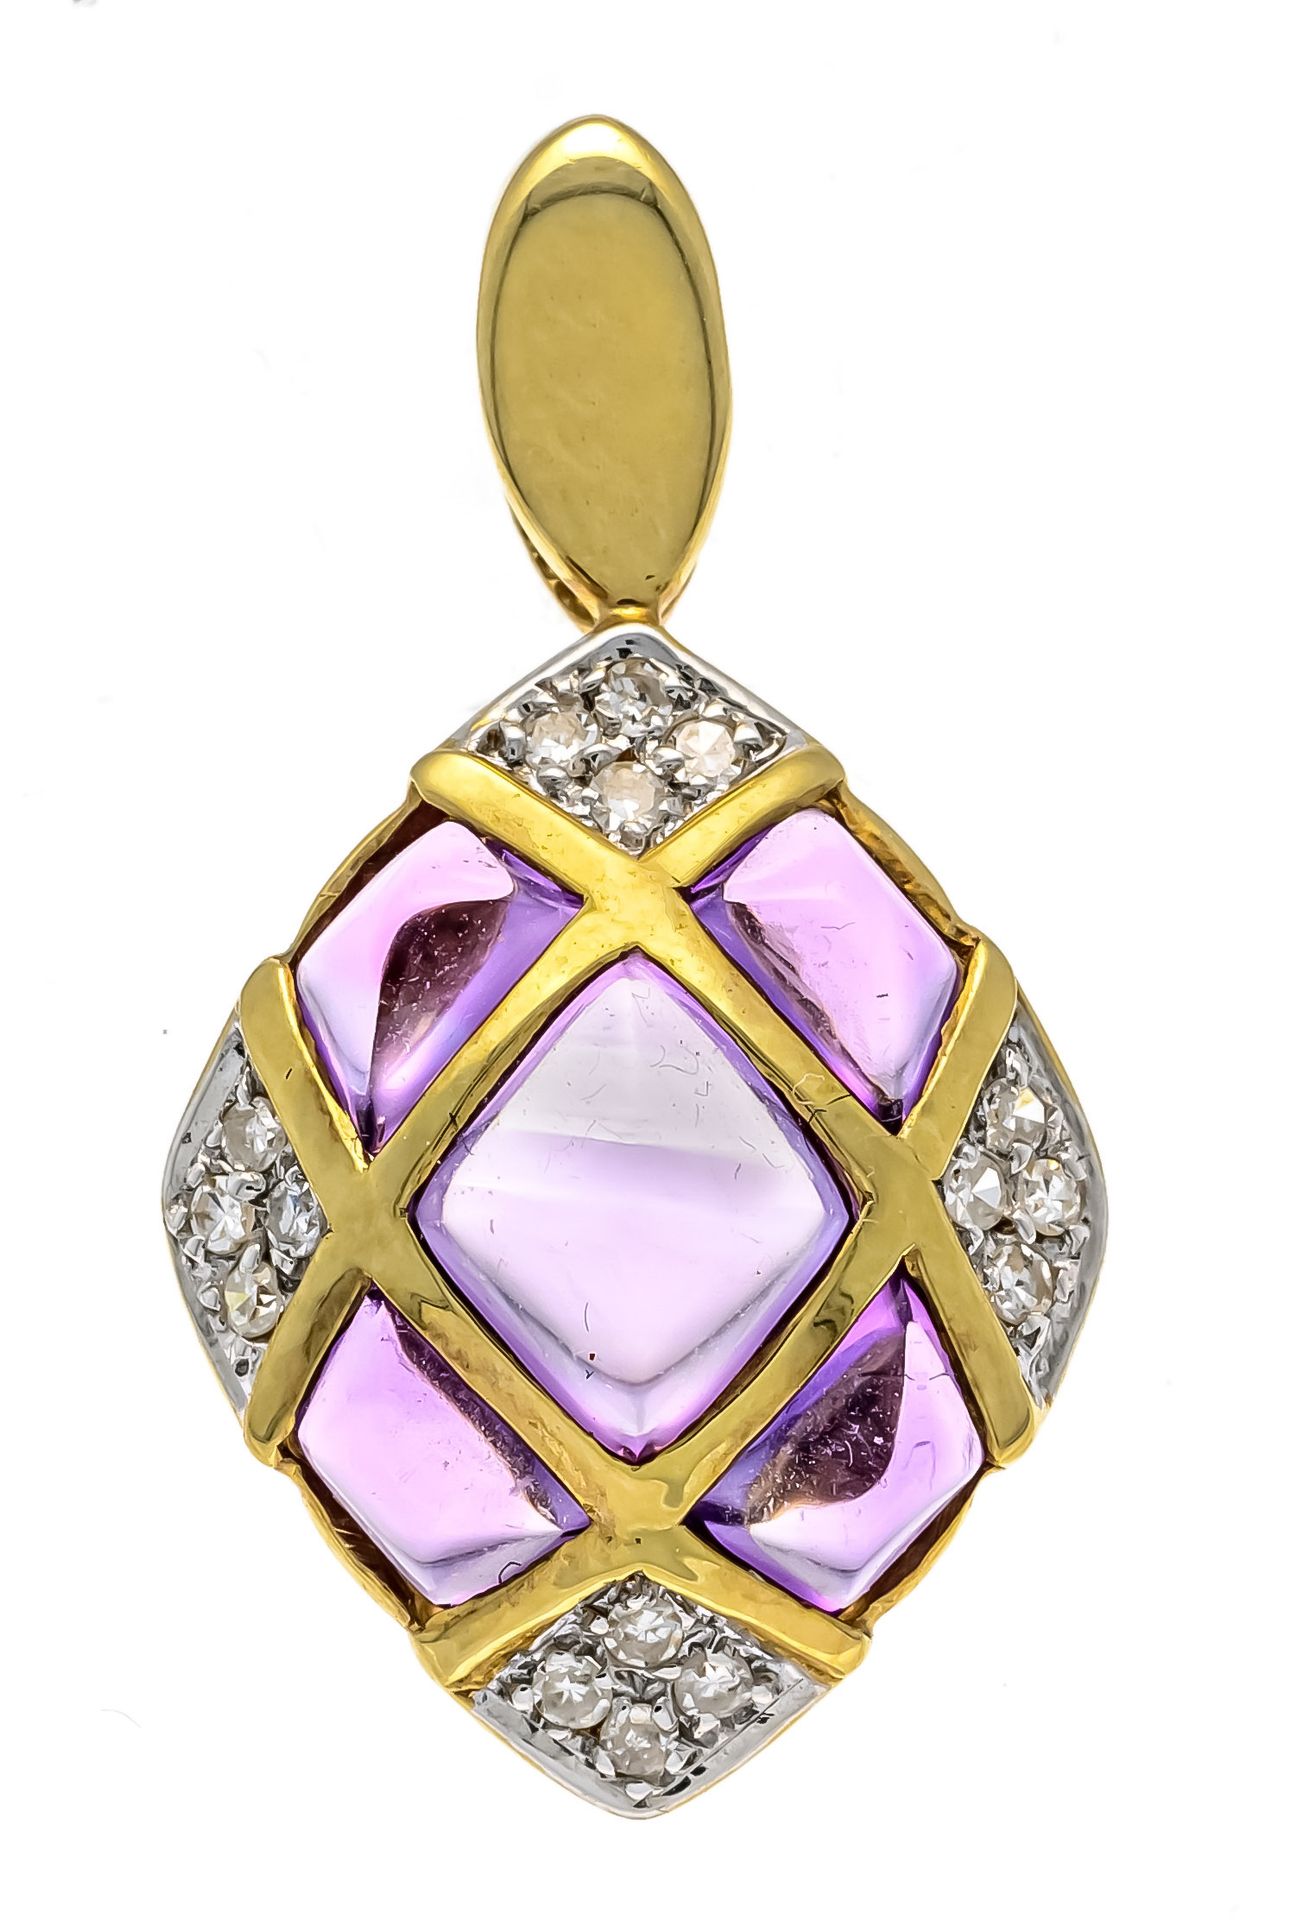 Null 紫水晶钻石吊坠GG/WG 585/000，含5颗相匹配的凸圆形紫水晶7.5 x 6.5 - 5.2 x 4.8毫米和16颗八角形钻石，共0.16克拉，&hellip;